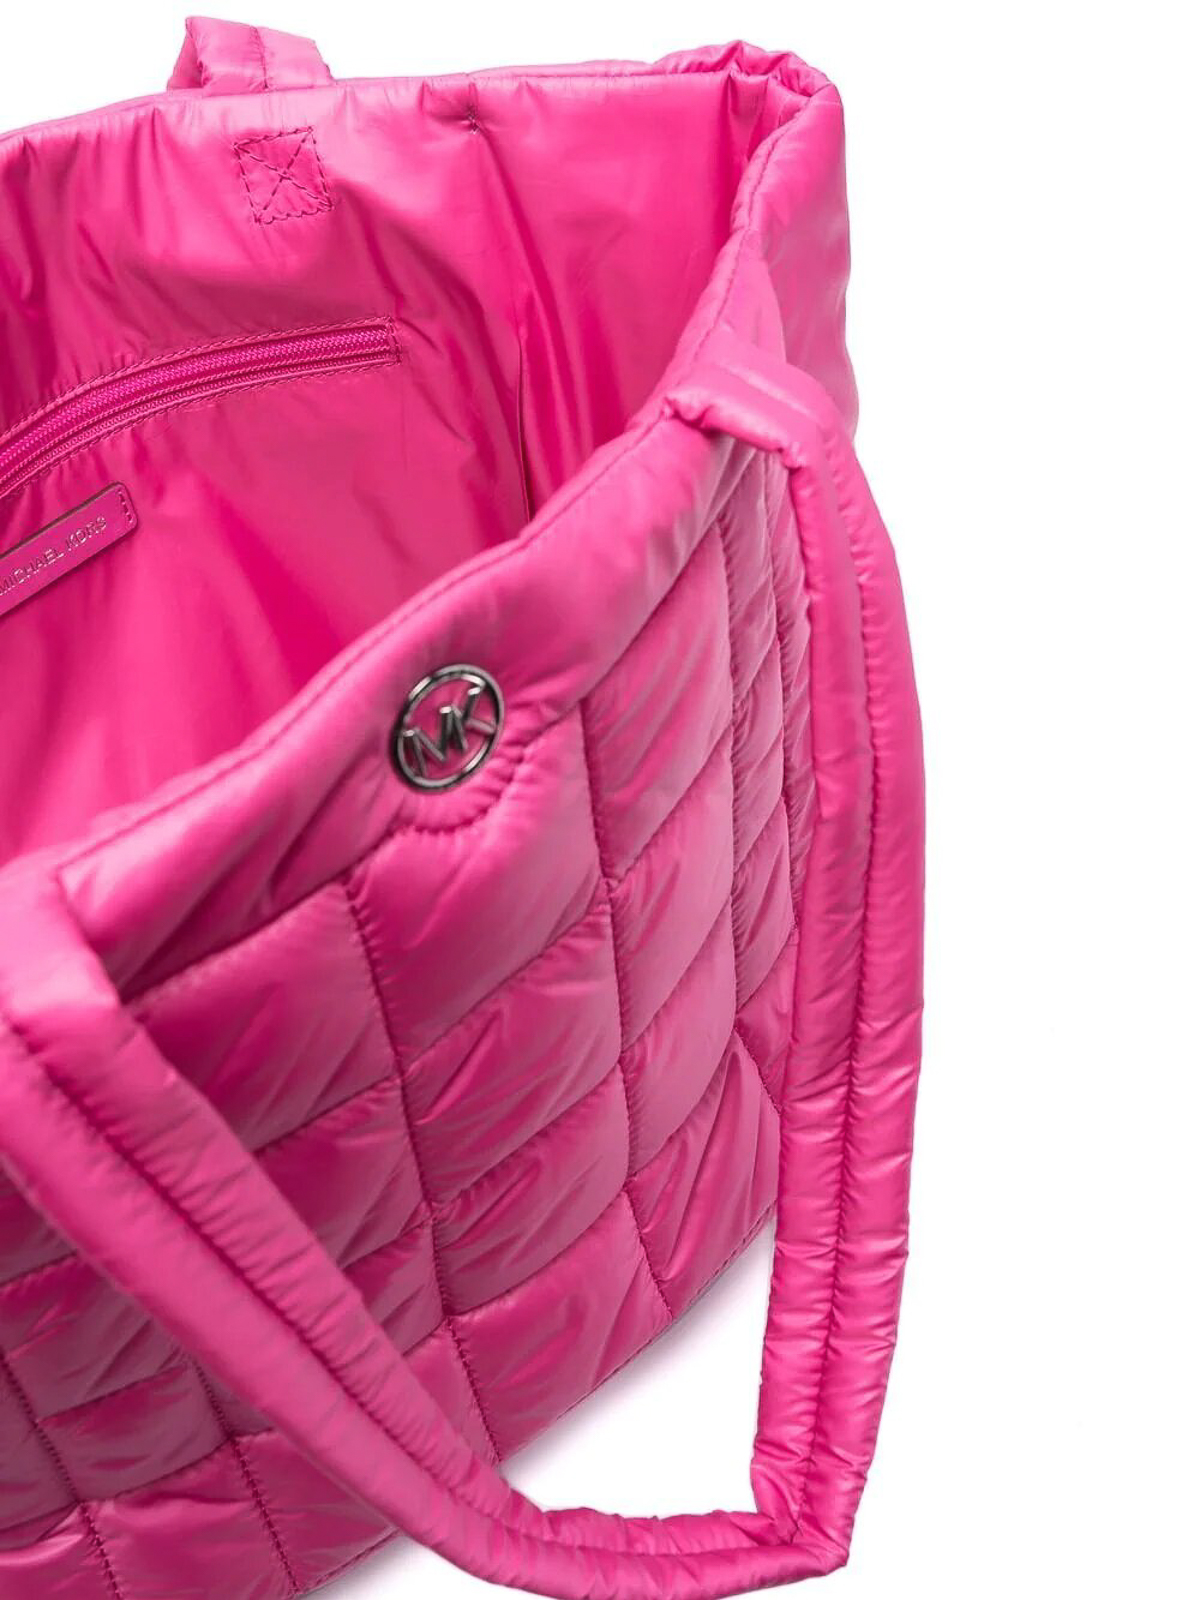 Michael Kors Backpack Purse Neon Pink